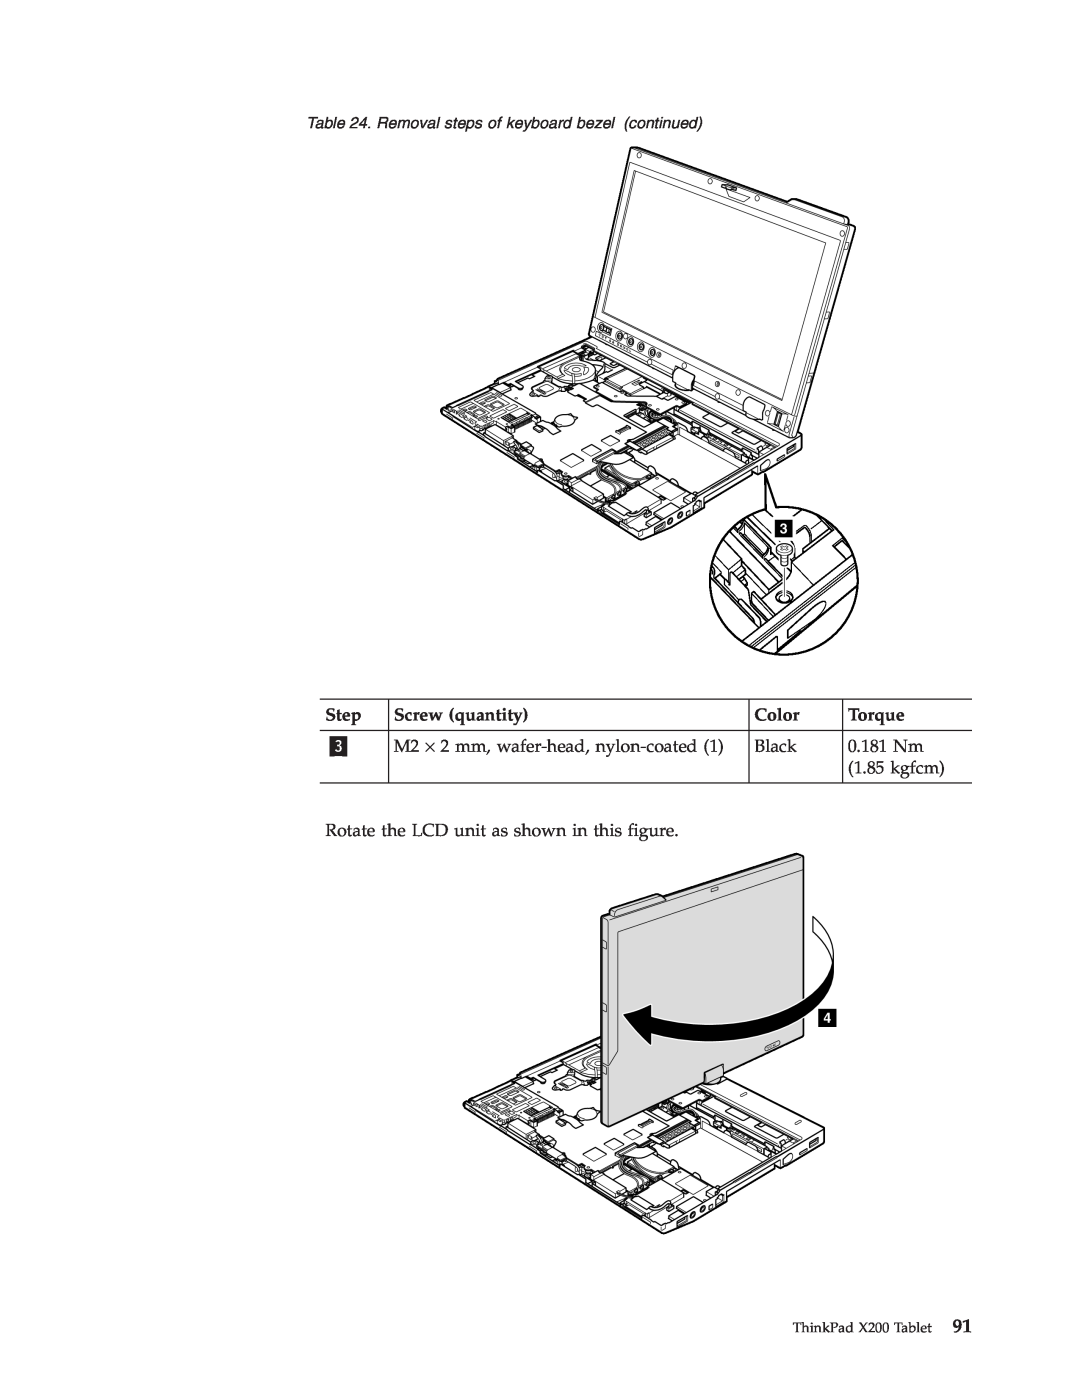 Lenovo manual Step, Screw quantity, Color, Torque, ThinkPad X200 Tablet 